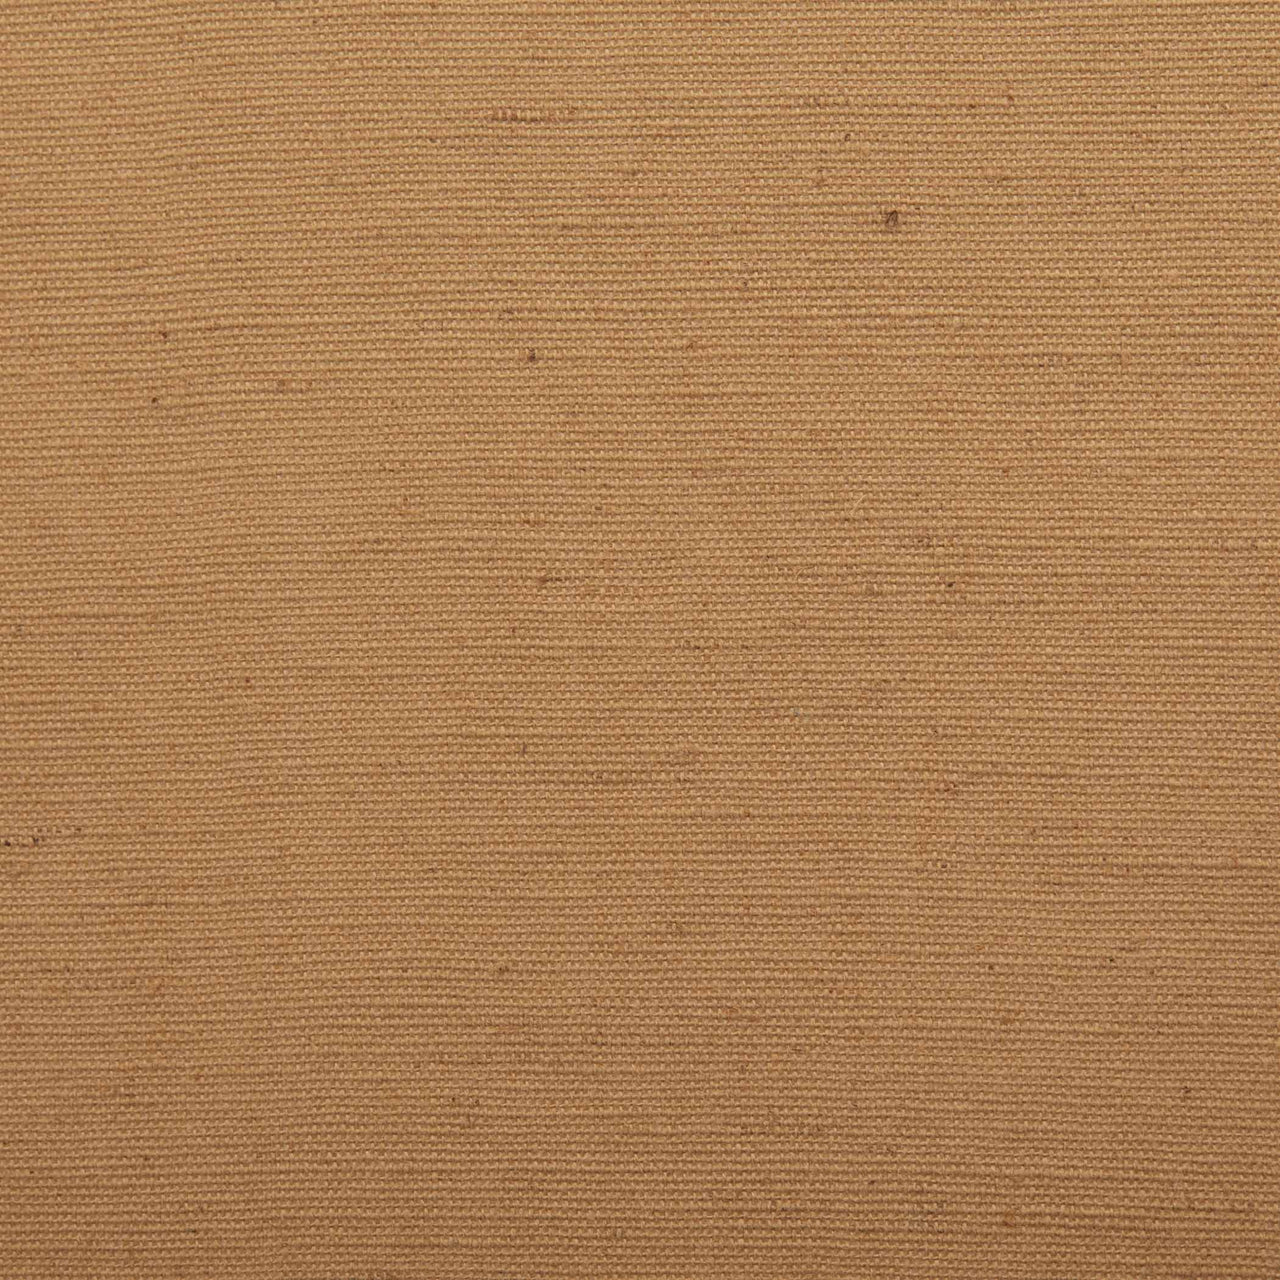 Simple Life Flax Khaki Panel Curtain Set of 2 84x40 VHC Brands